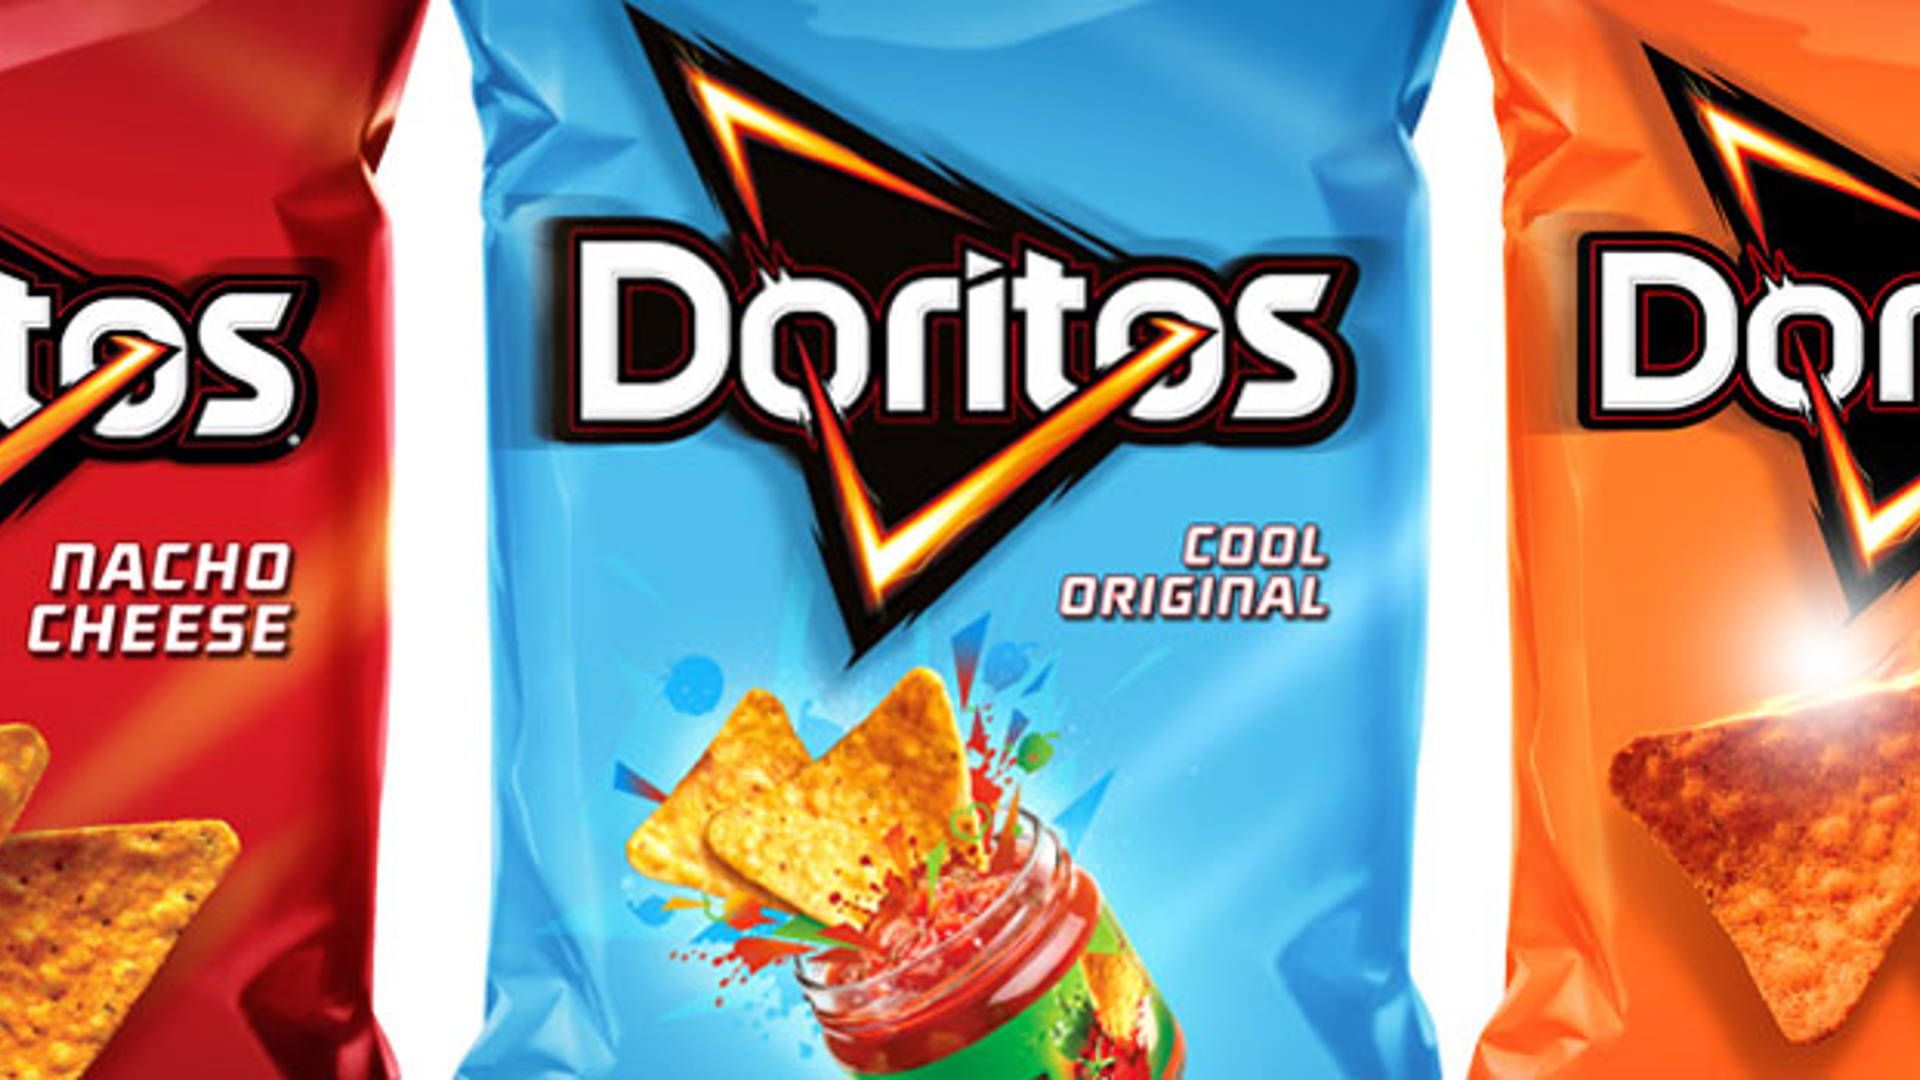 New Doritos Global Packaging. Dieline, Branding & Packaging Inspiration